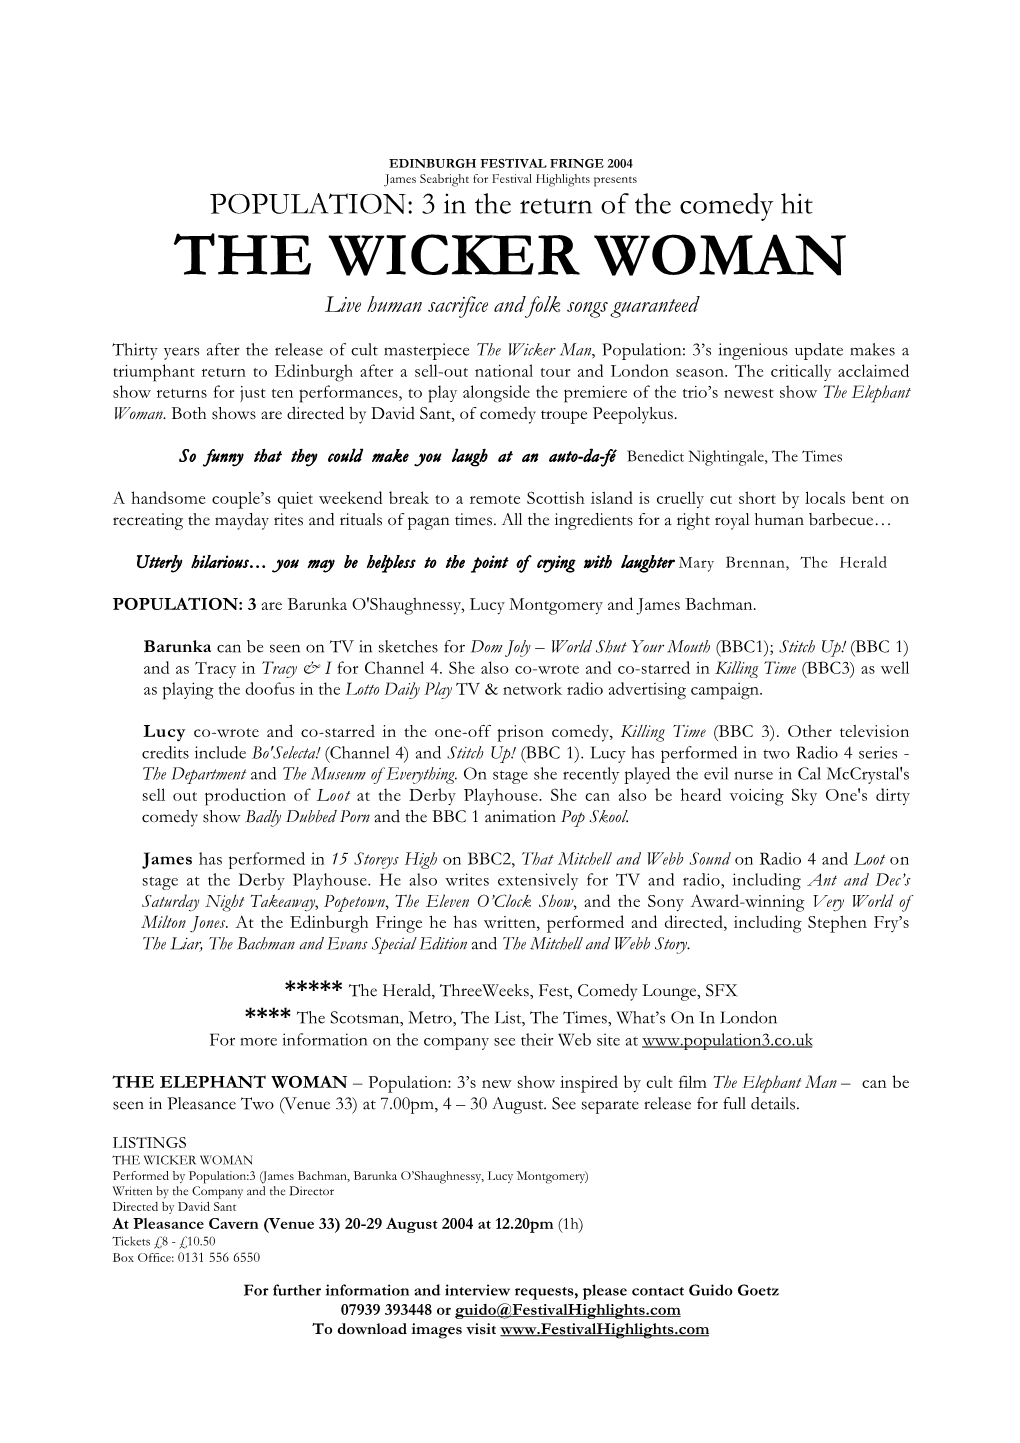 THE WICKER WOMAN Live Human Sacrifice and Folk Songs Guaranteed